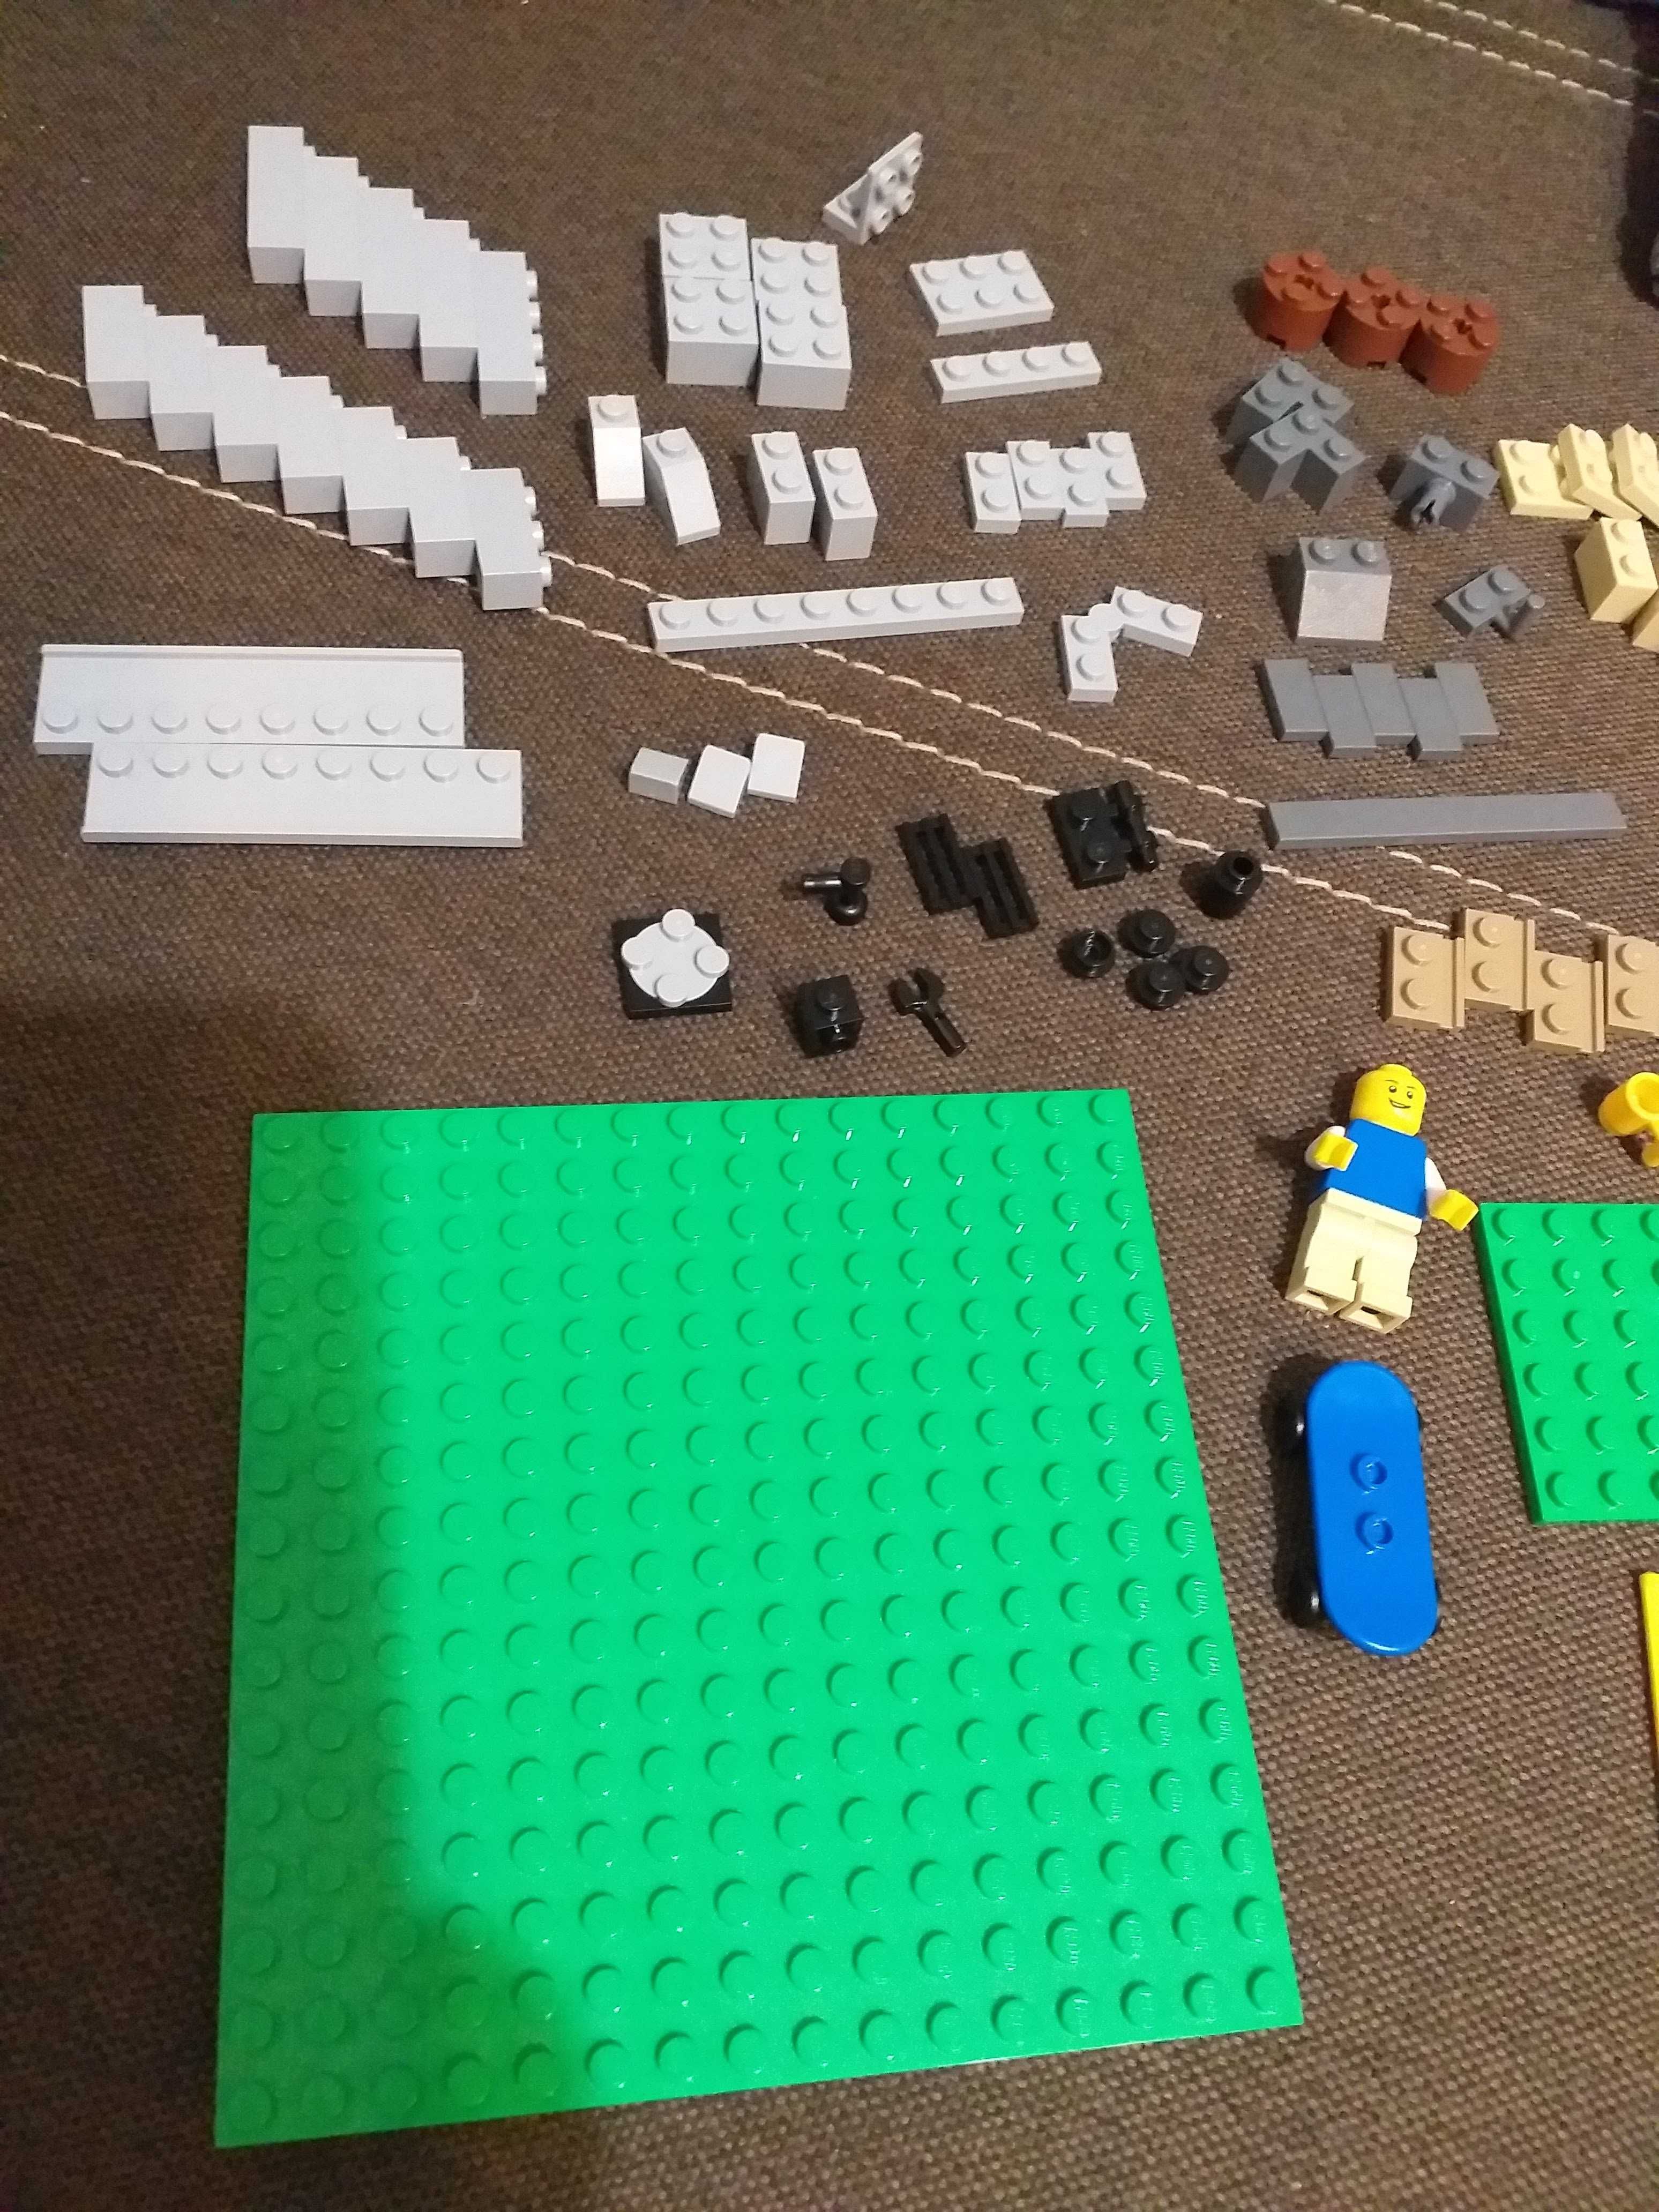 Lego Creator 31009-Casuta de vacanta